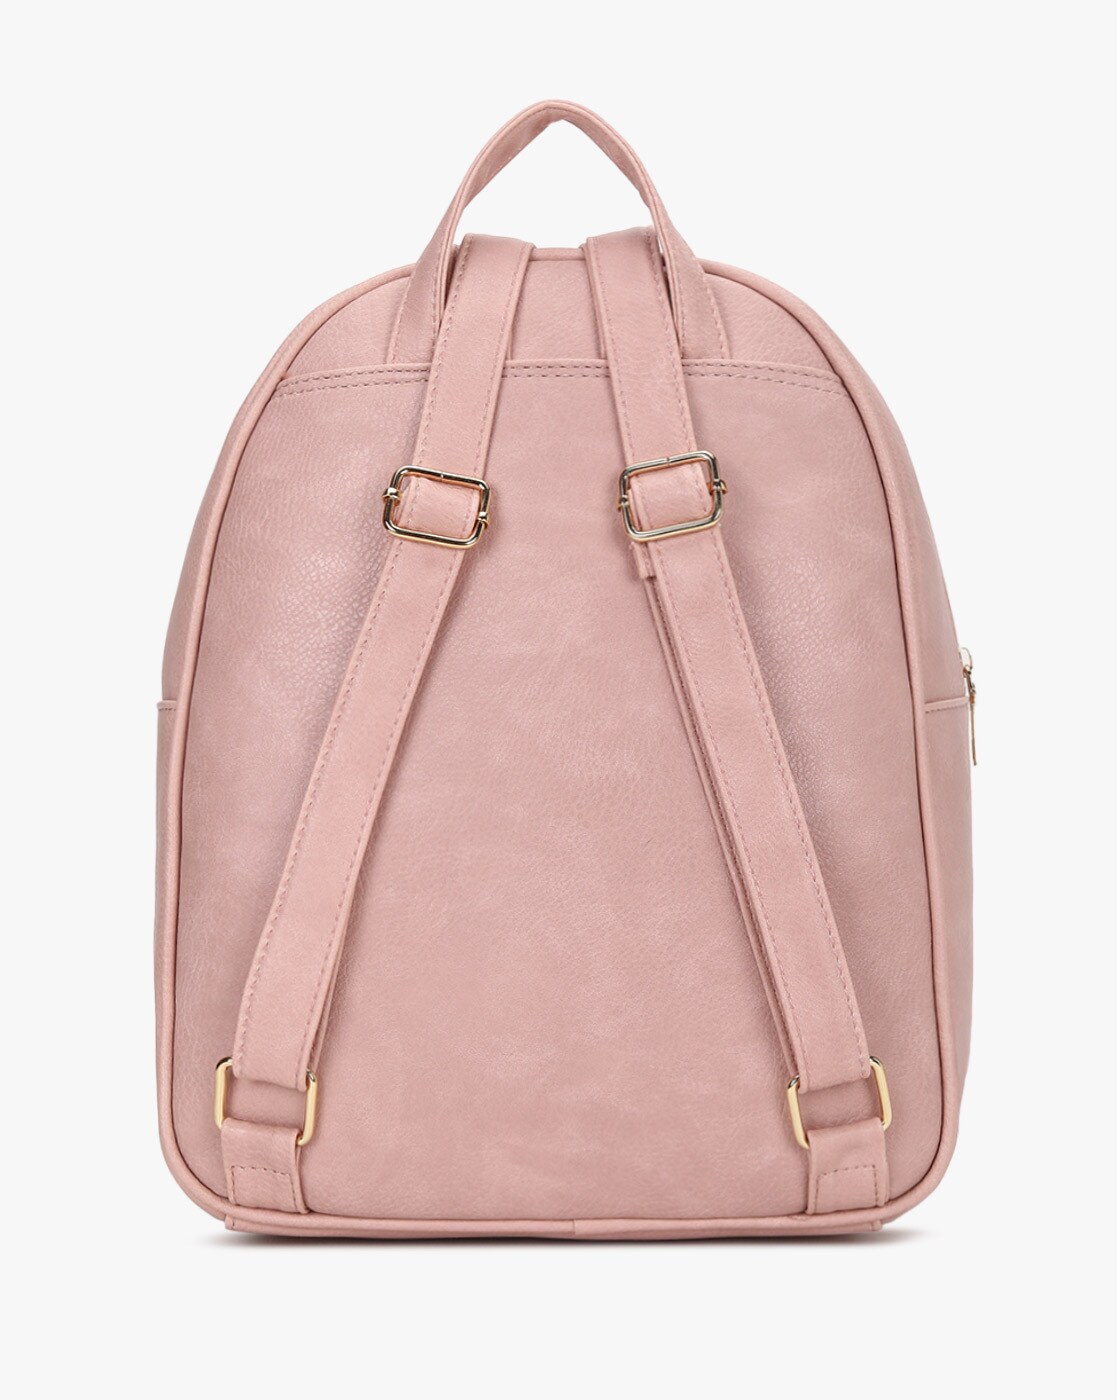 Sydney Love Backpack Purse Bag Olive Green Nylon Brown Vegan Leather Trim  Boho | eBay